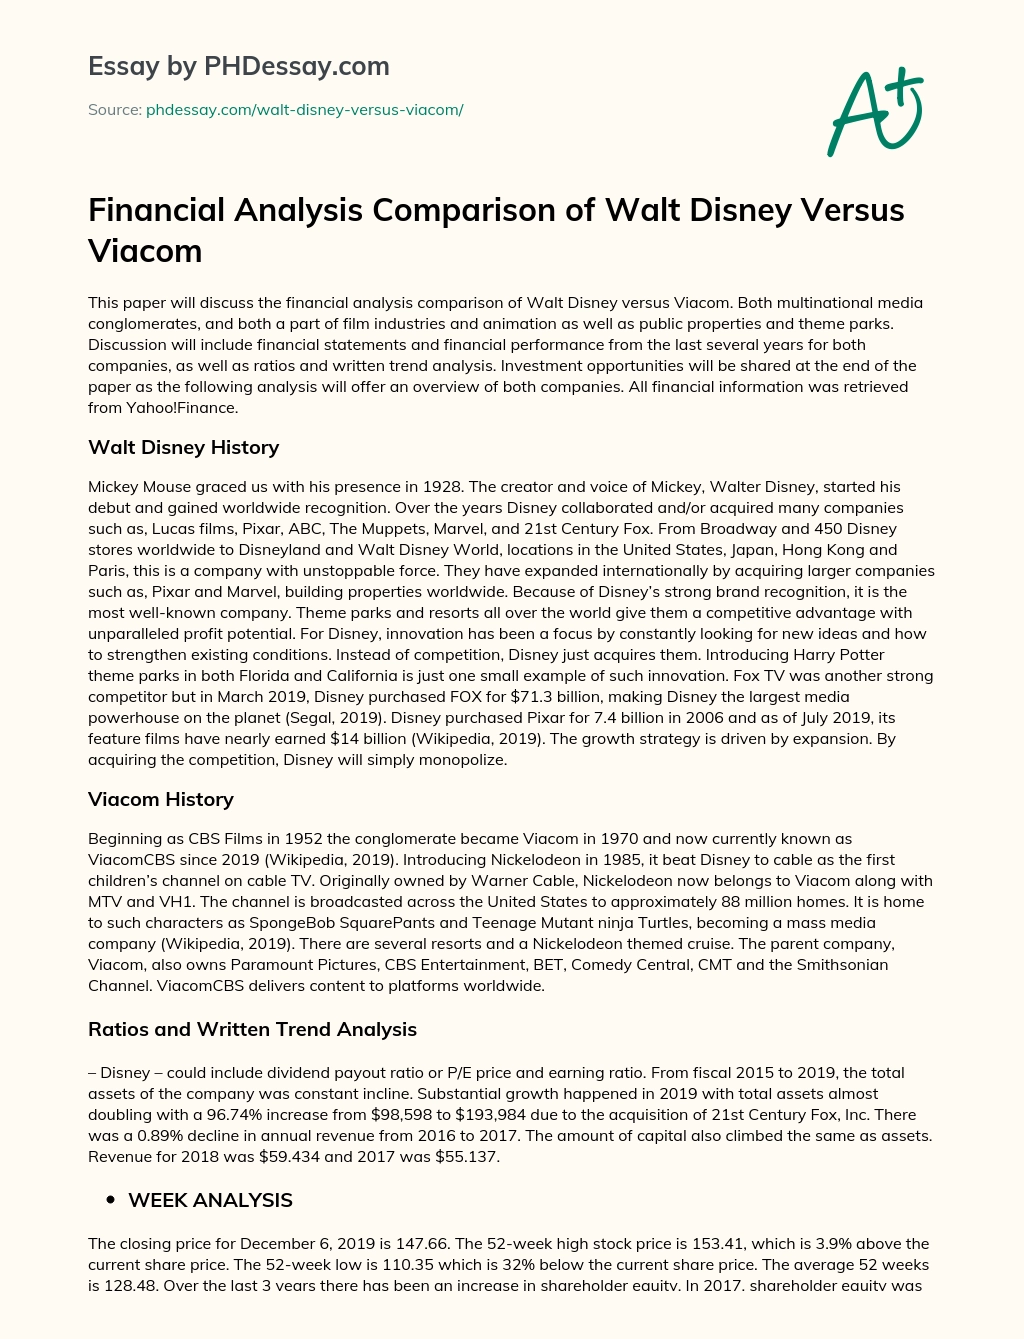 Financial Analysis Comparison of Walt Disney Versus Viacom essay